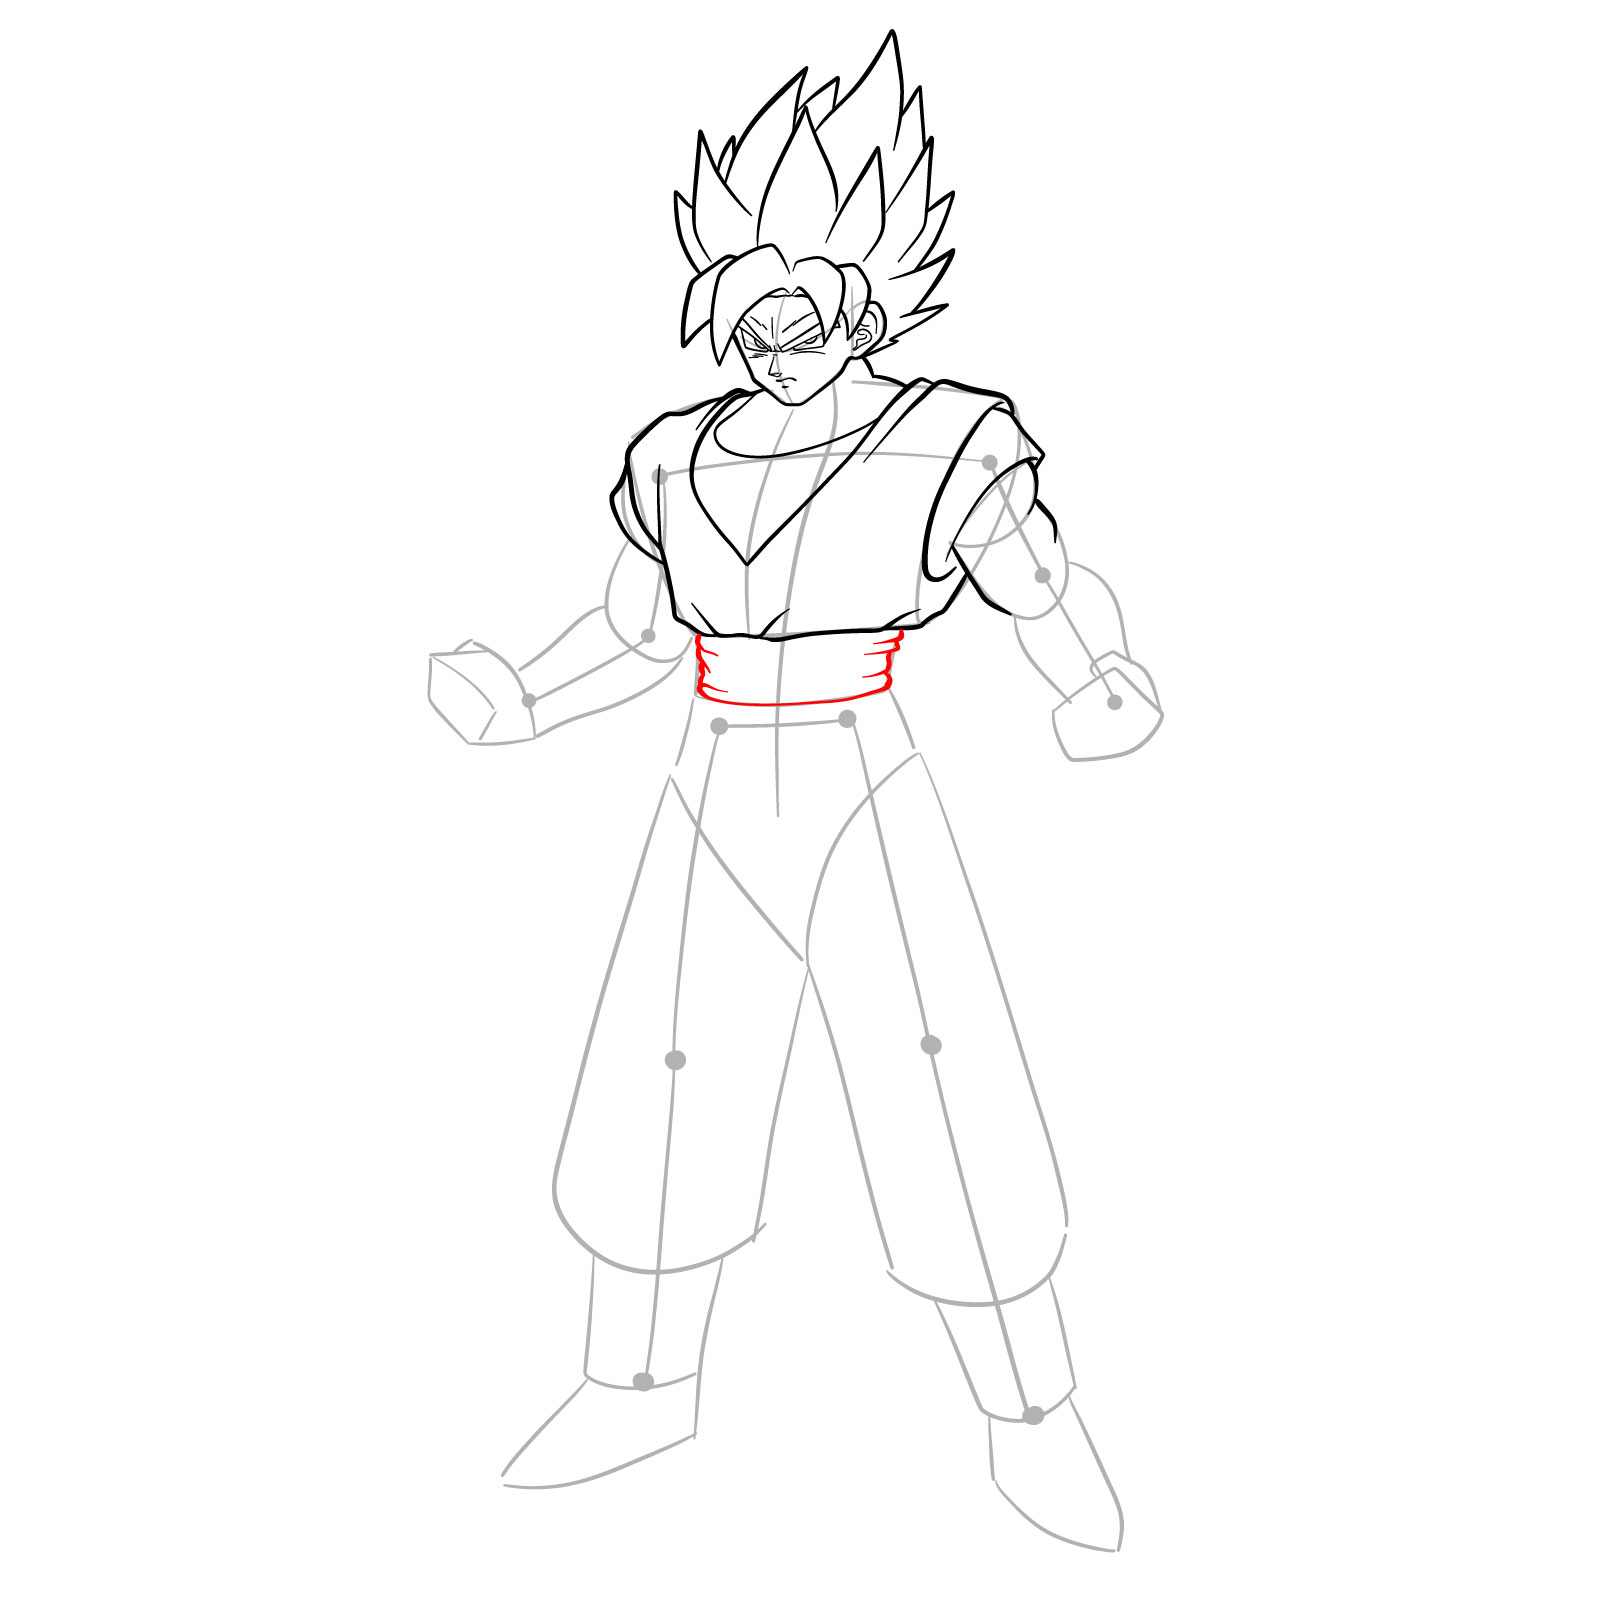 How to draw Goku in Super Saiyan form - step 21